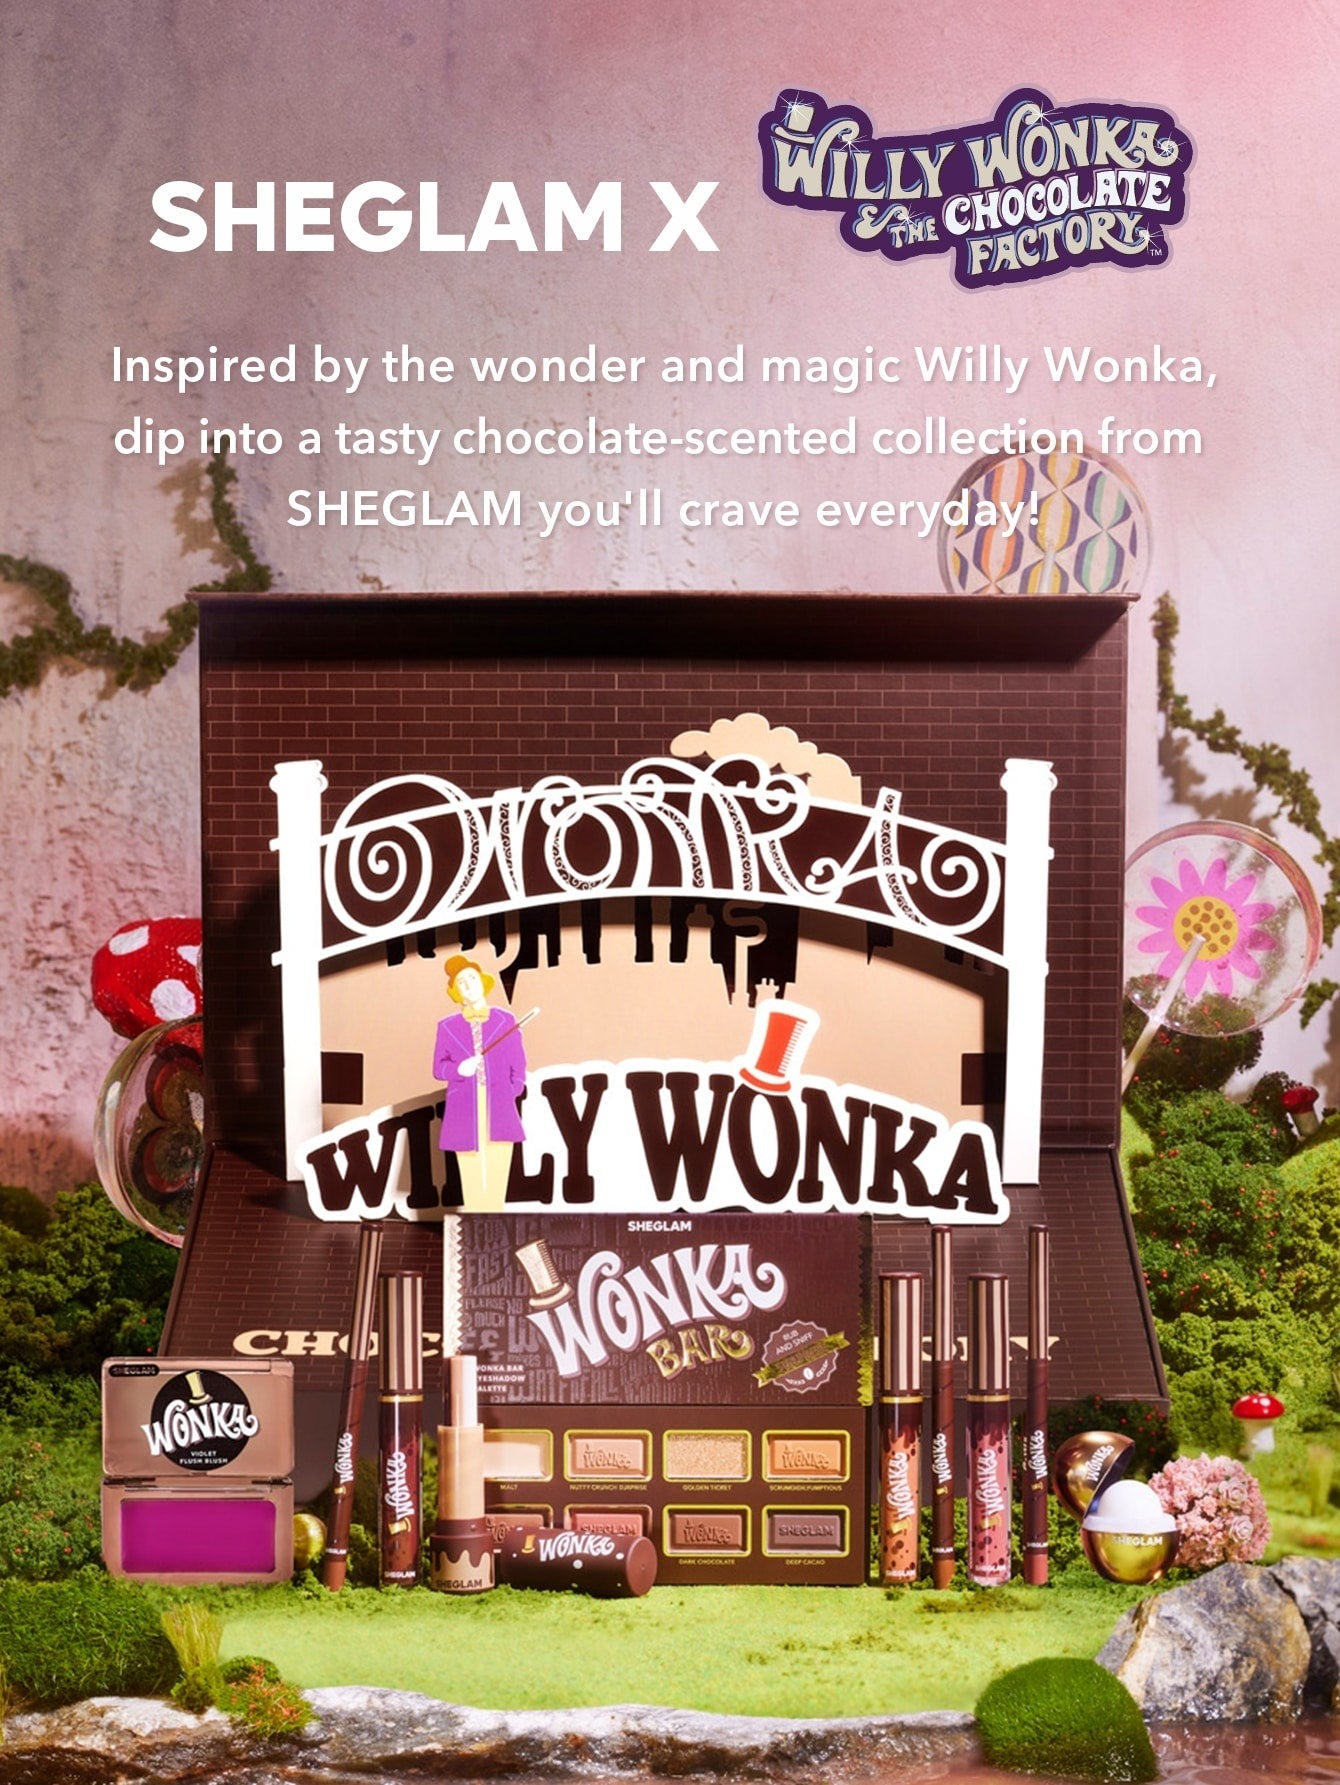 ست کلکسیون کامل مدل ویلی ونکا شیگلم Sheglam Willy Wonka Full Collection Set